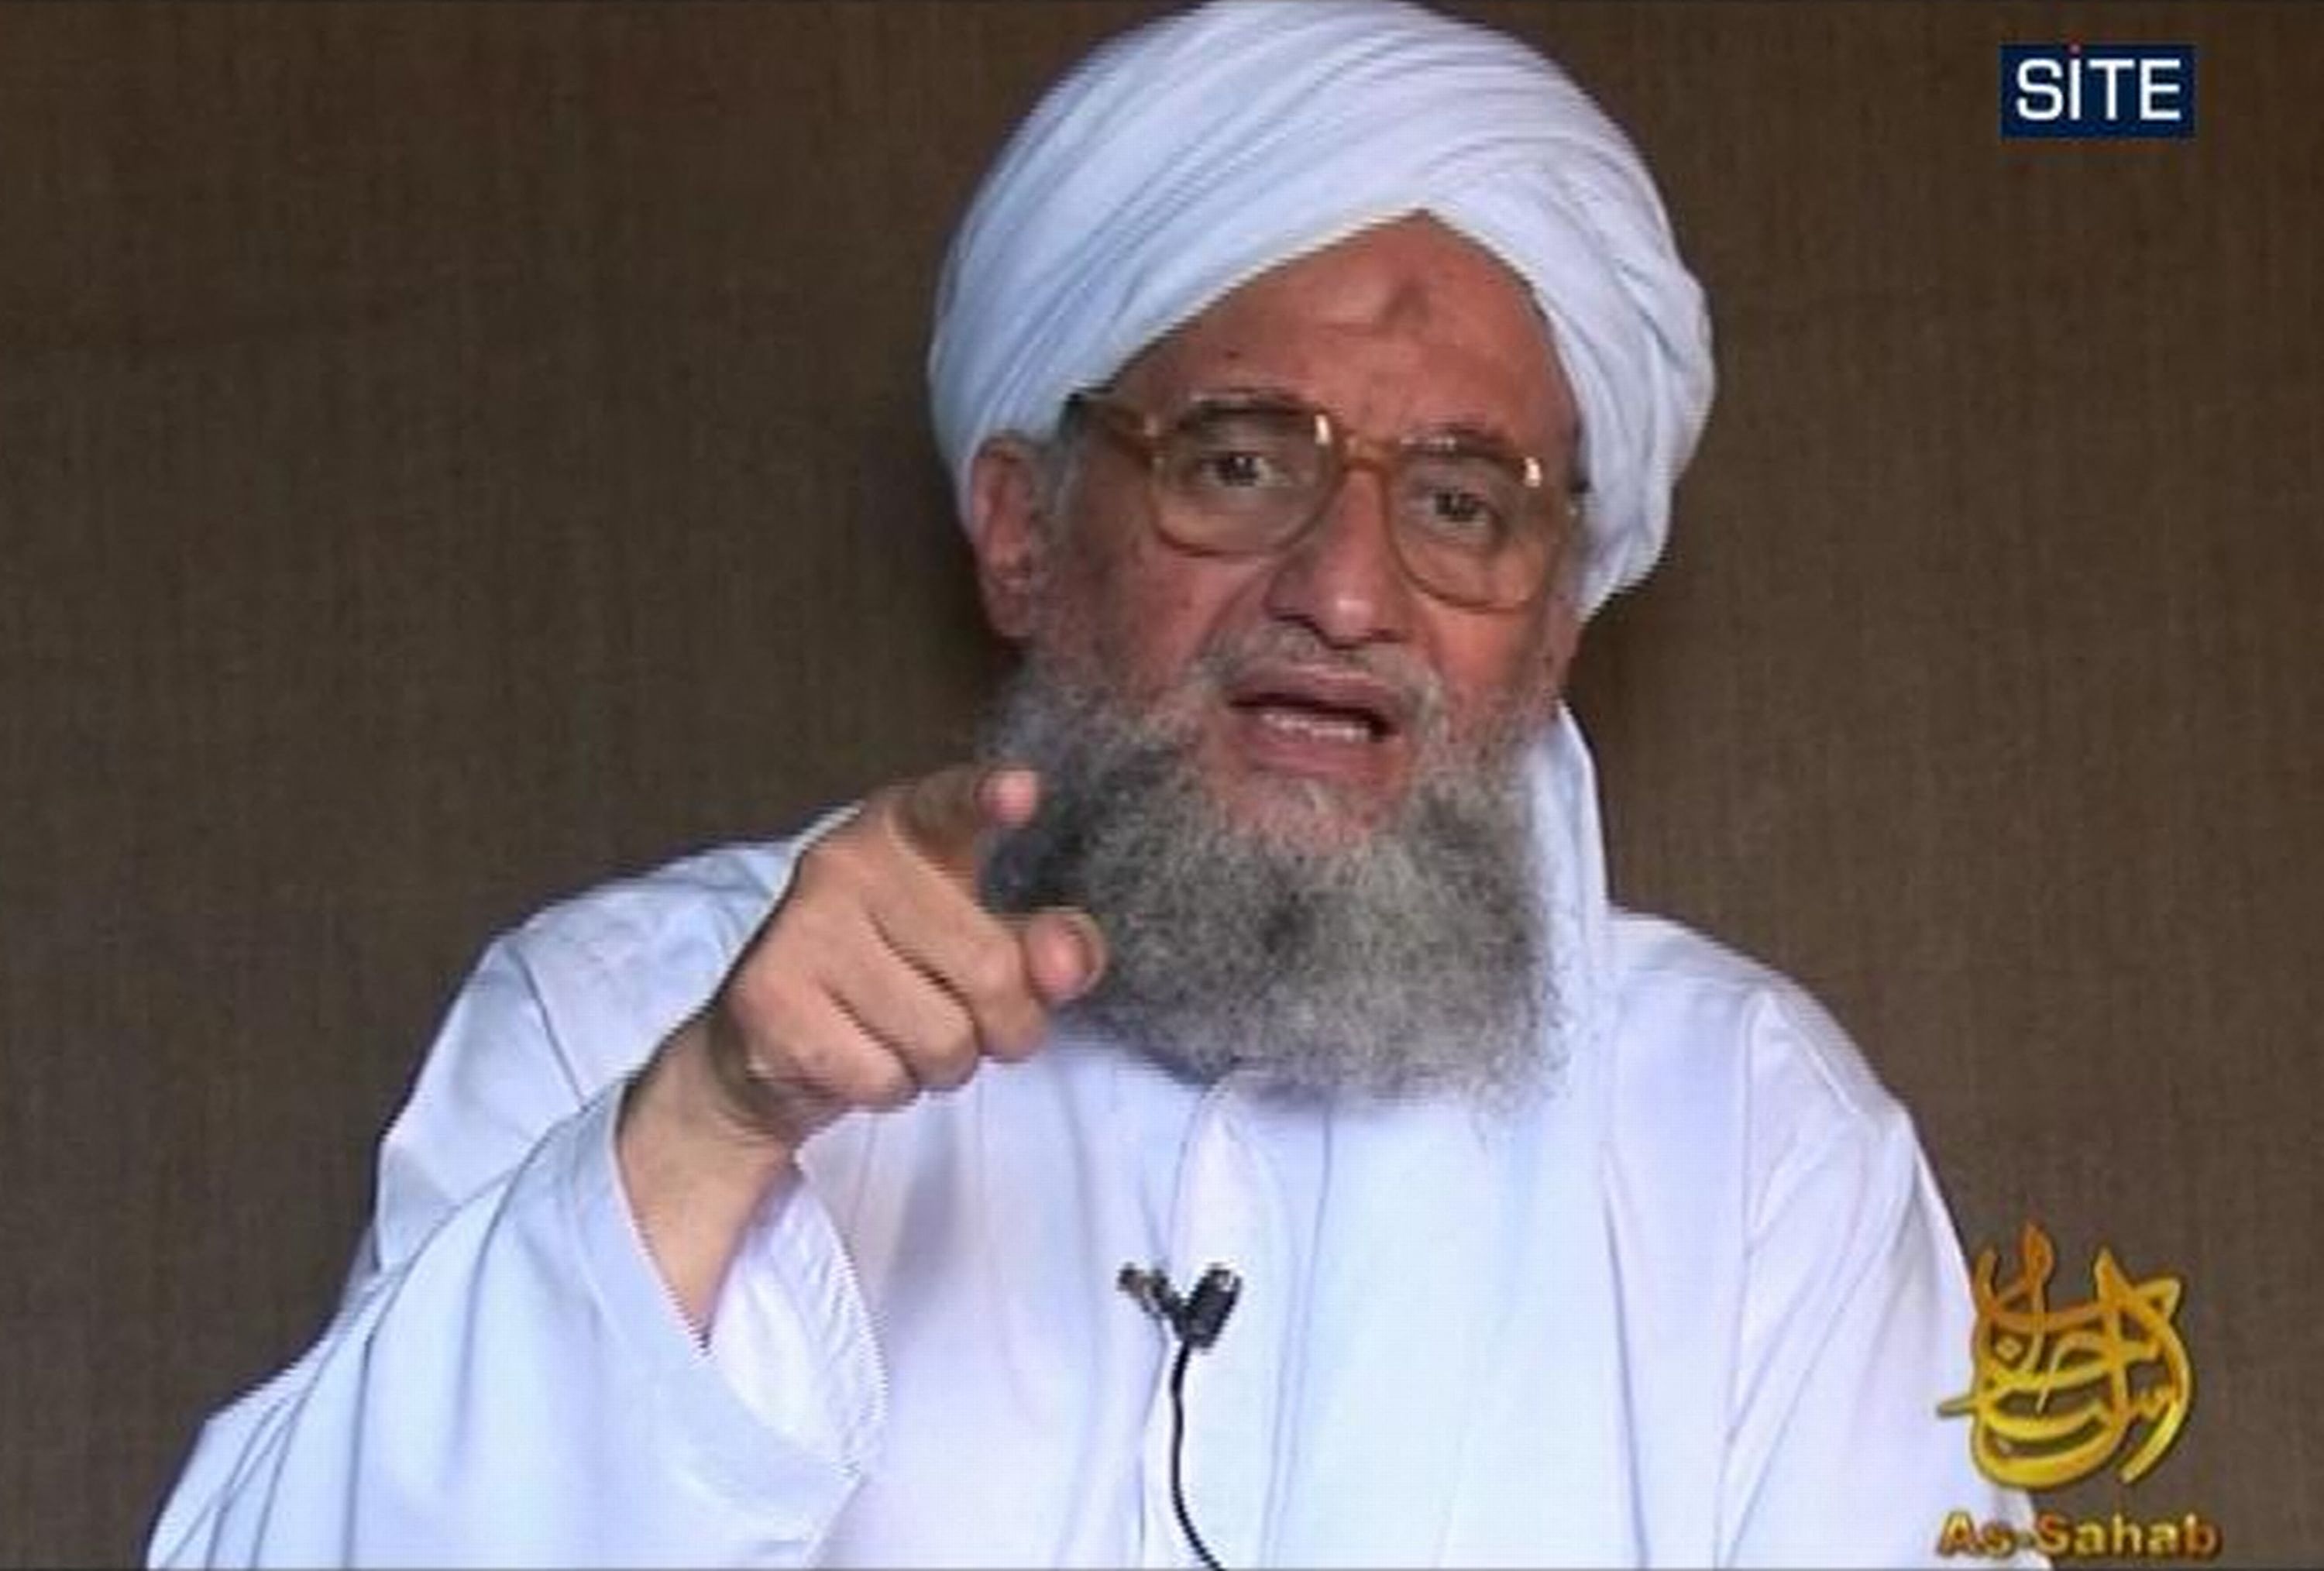 Al Qaeda chief